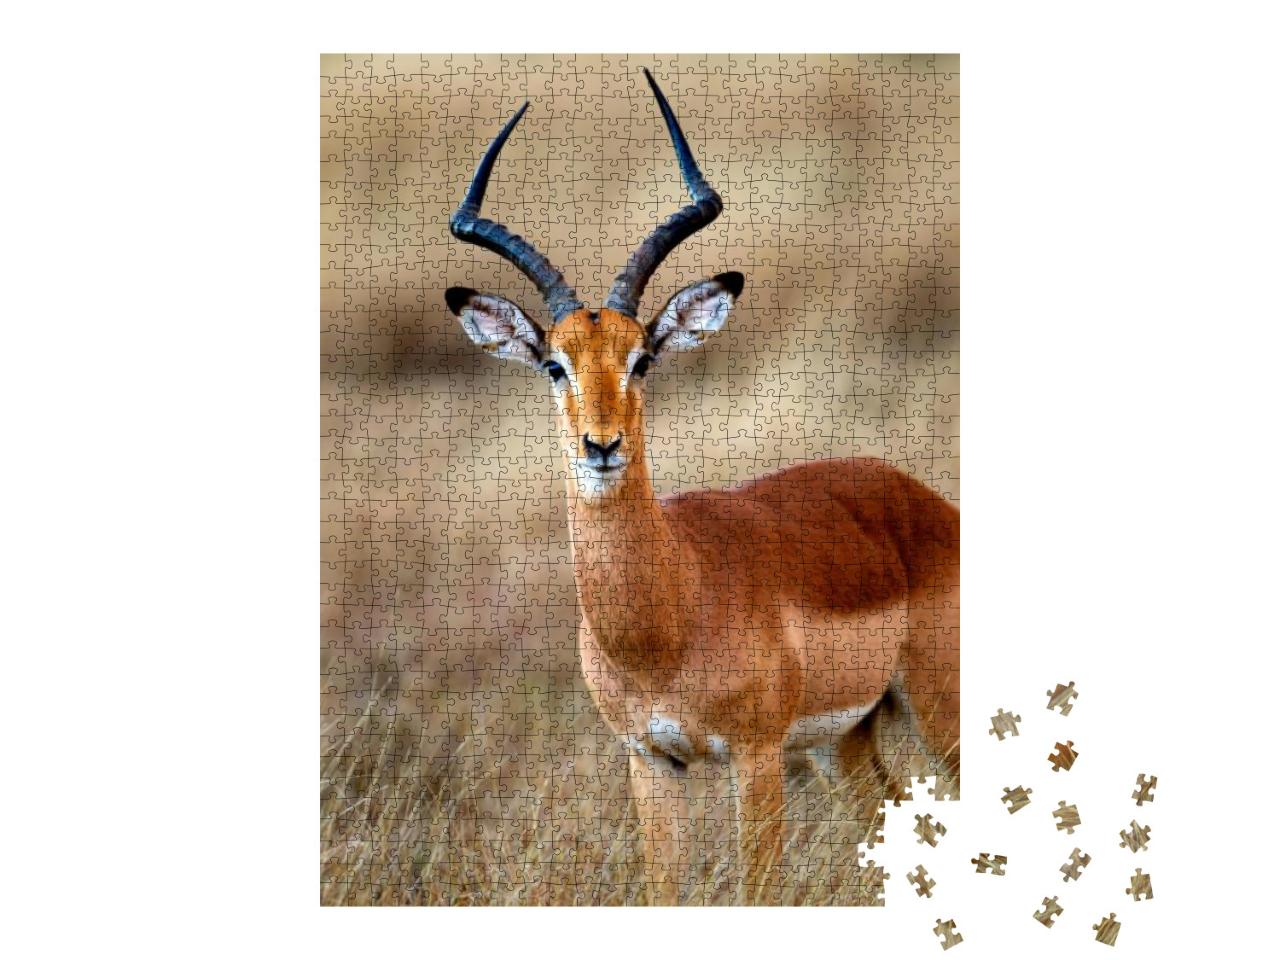 Puzzle 1000 Teile „Ein Impala Männchen im Kruger Nationalpark Südafrika“